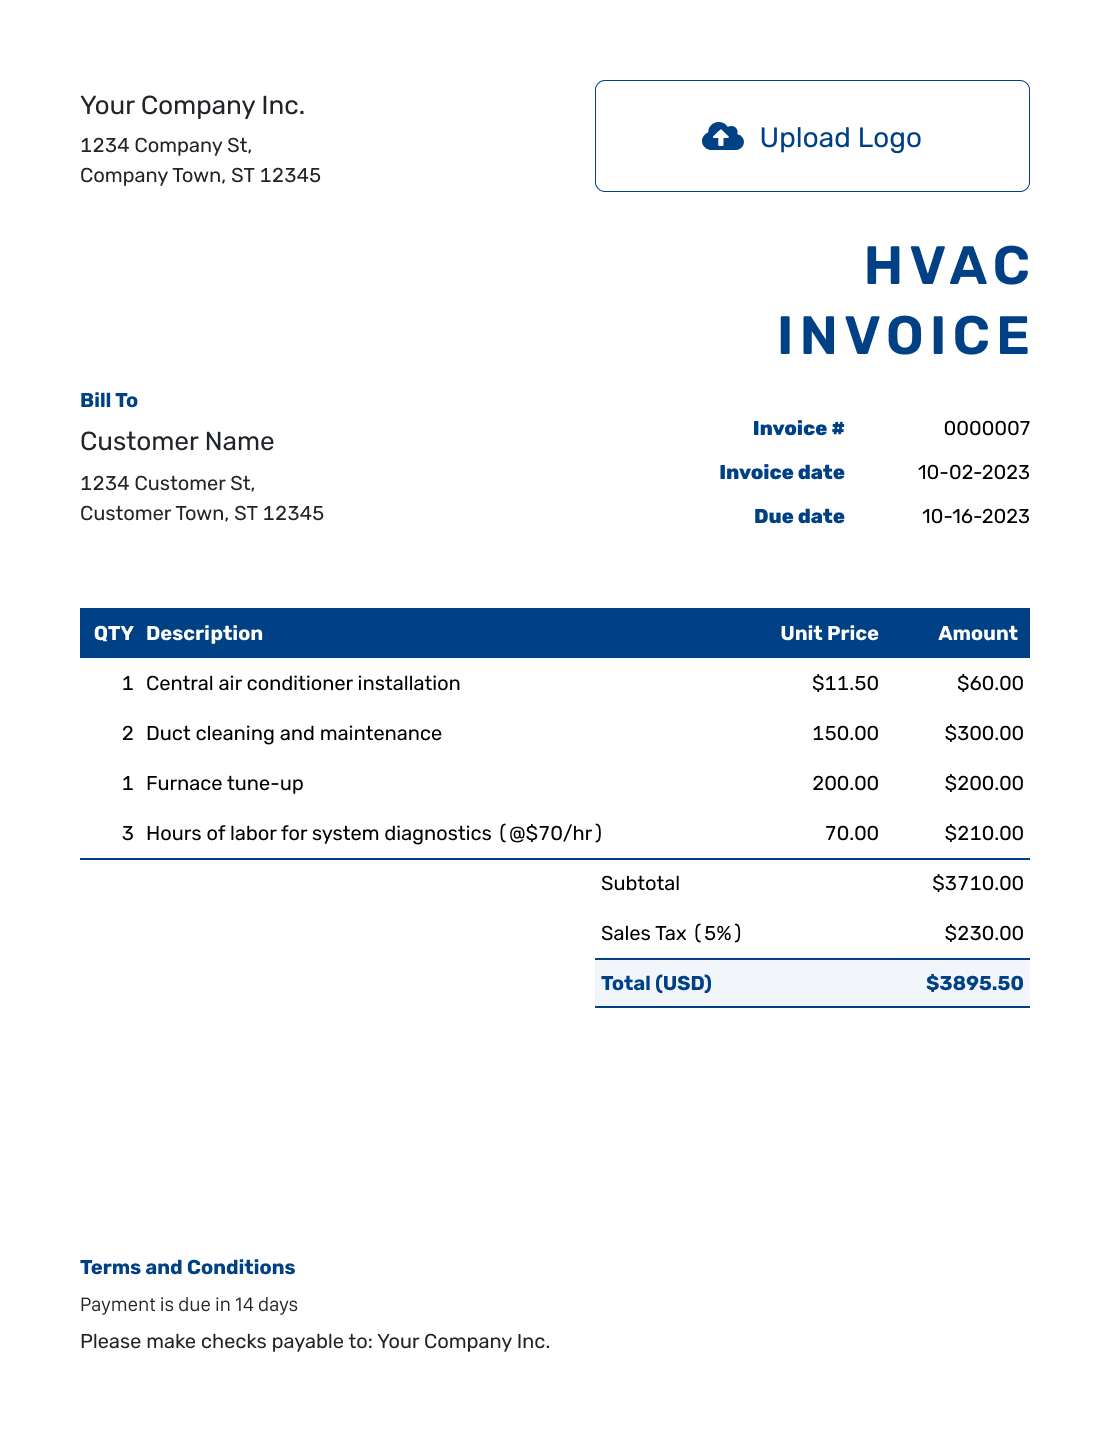 Sample HVAC Invoice Template